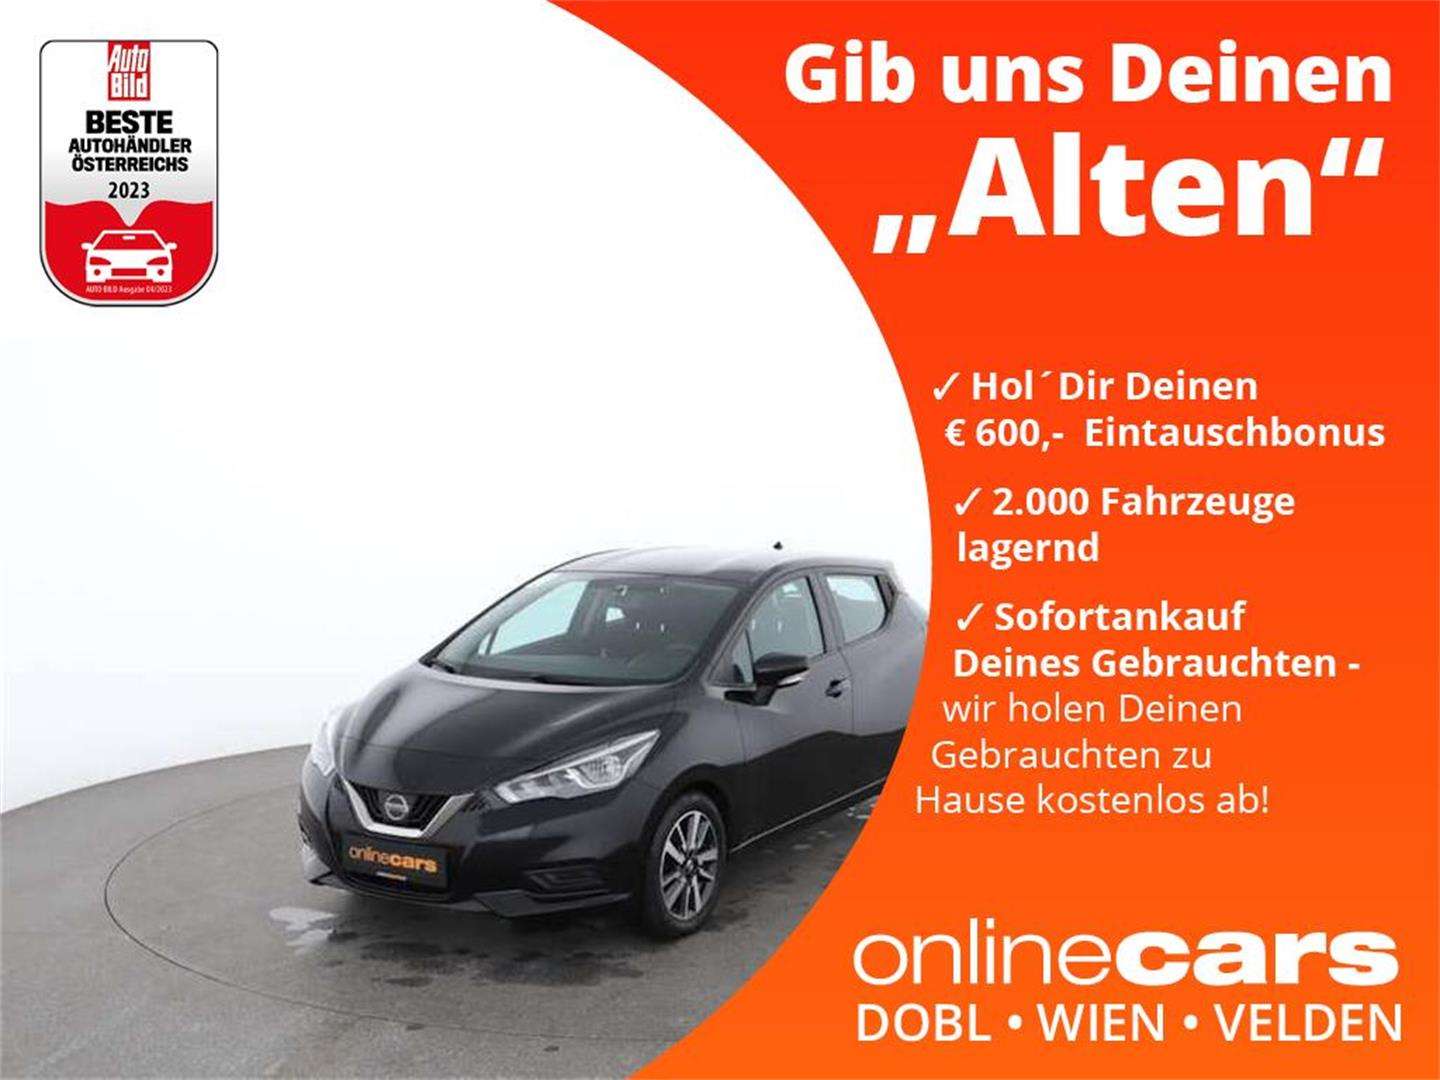 Nissan Micra Sedan in Black used in Dobl bei Lieboch for € 11,170.-